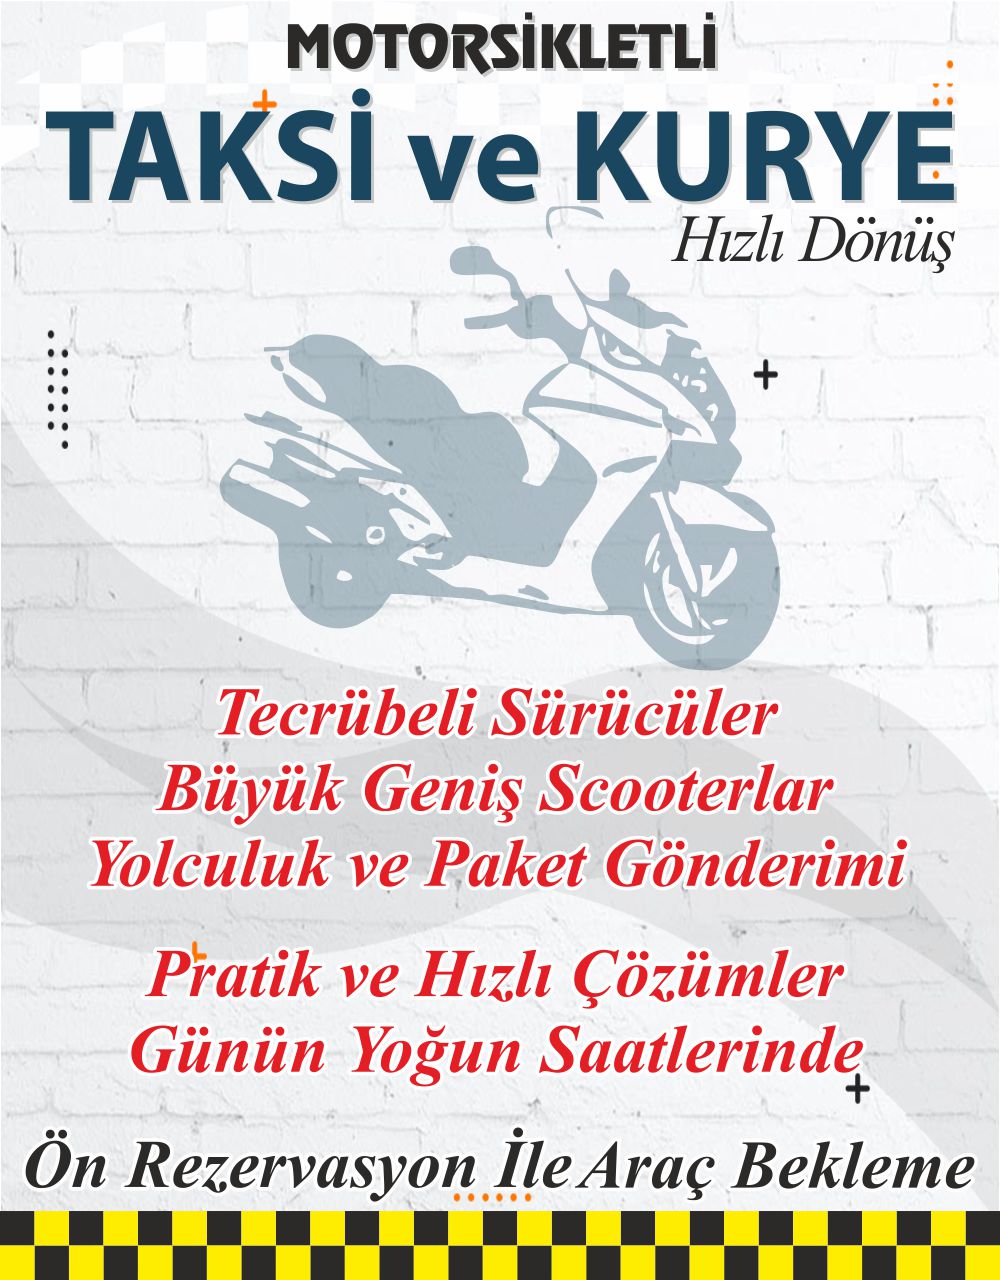 İstanbul içi Moto Kurye